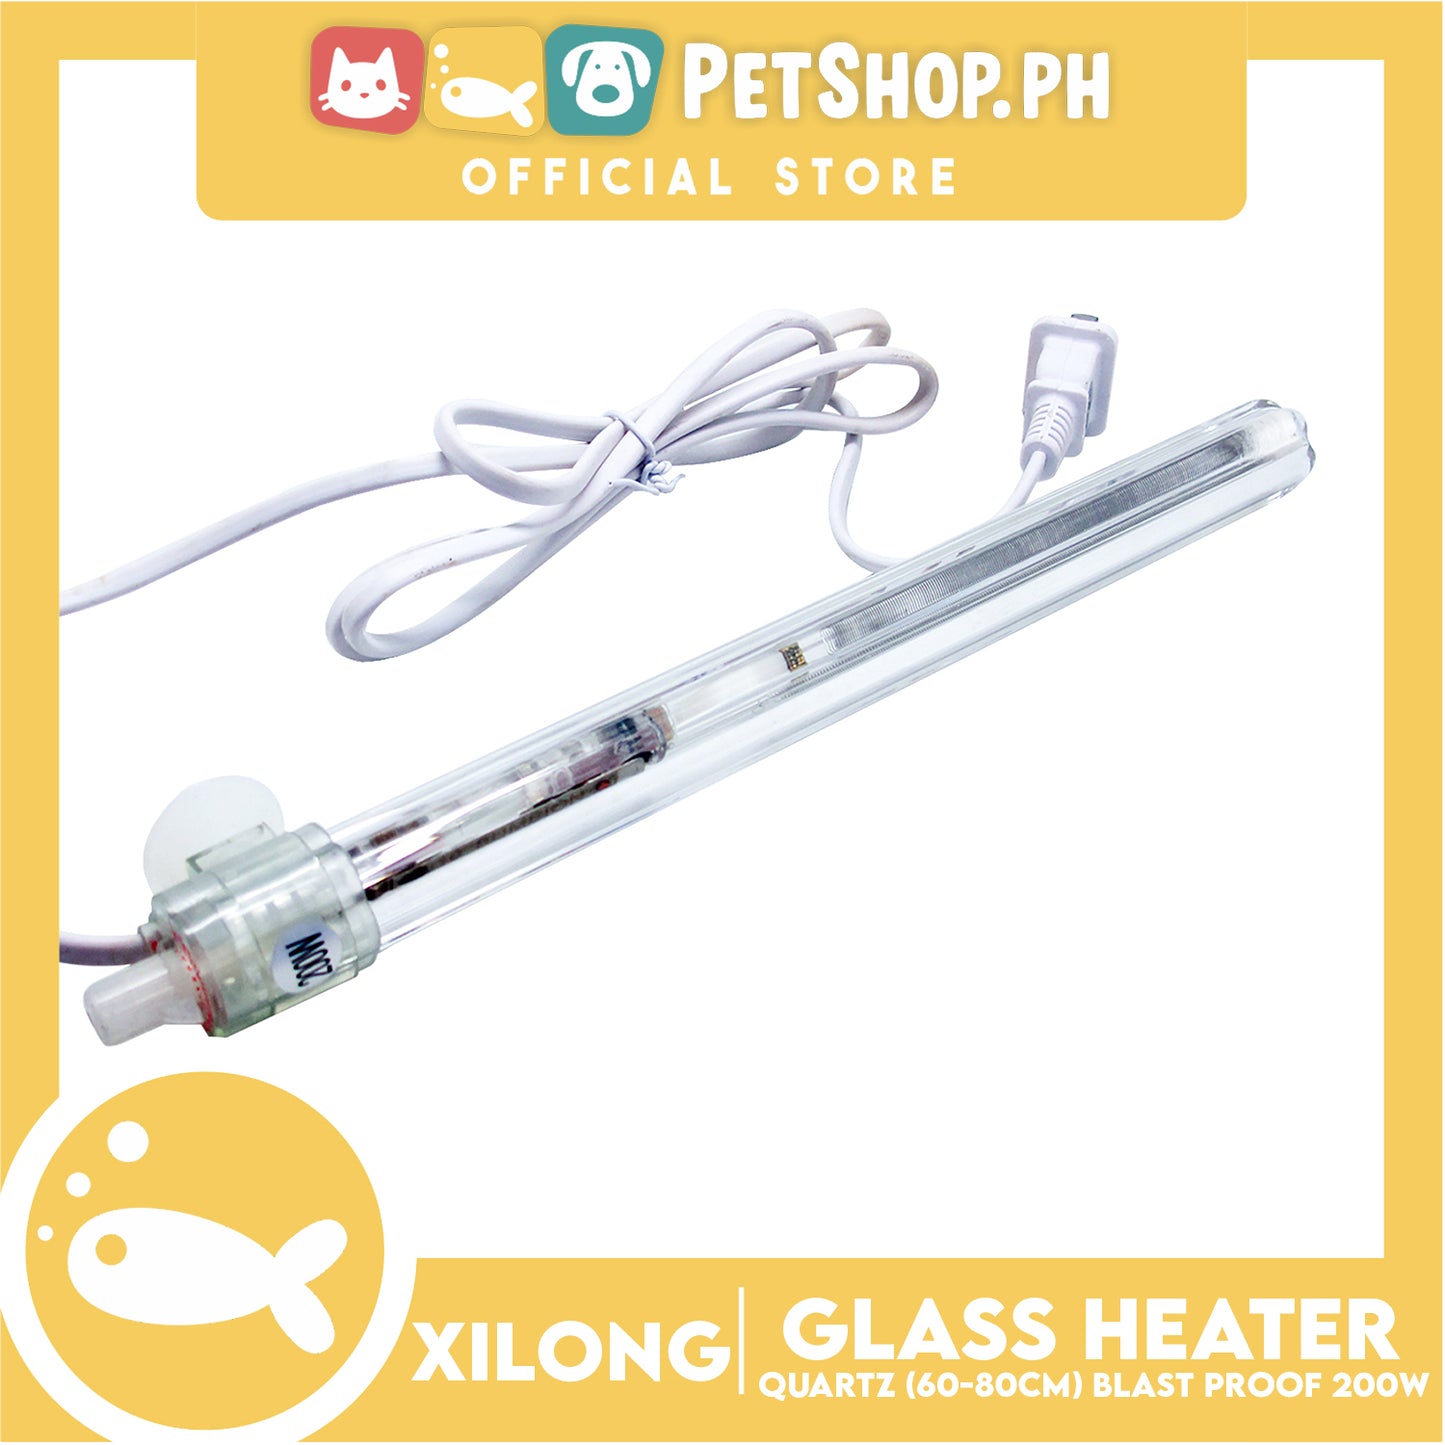 Xilong Quartz Glass Heater XL-525